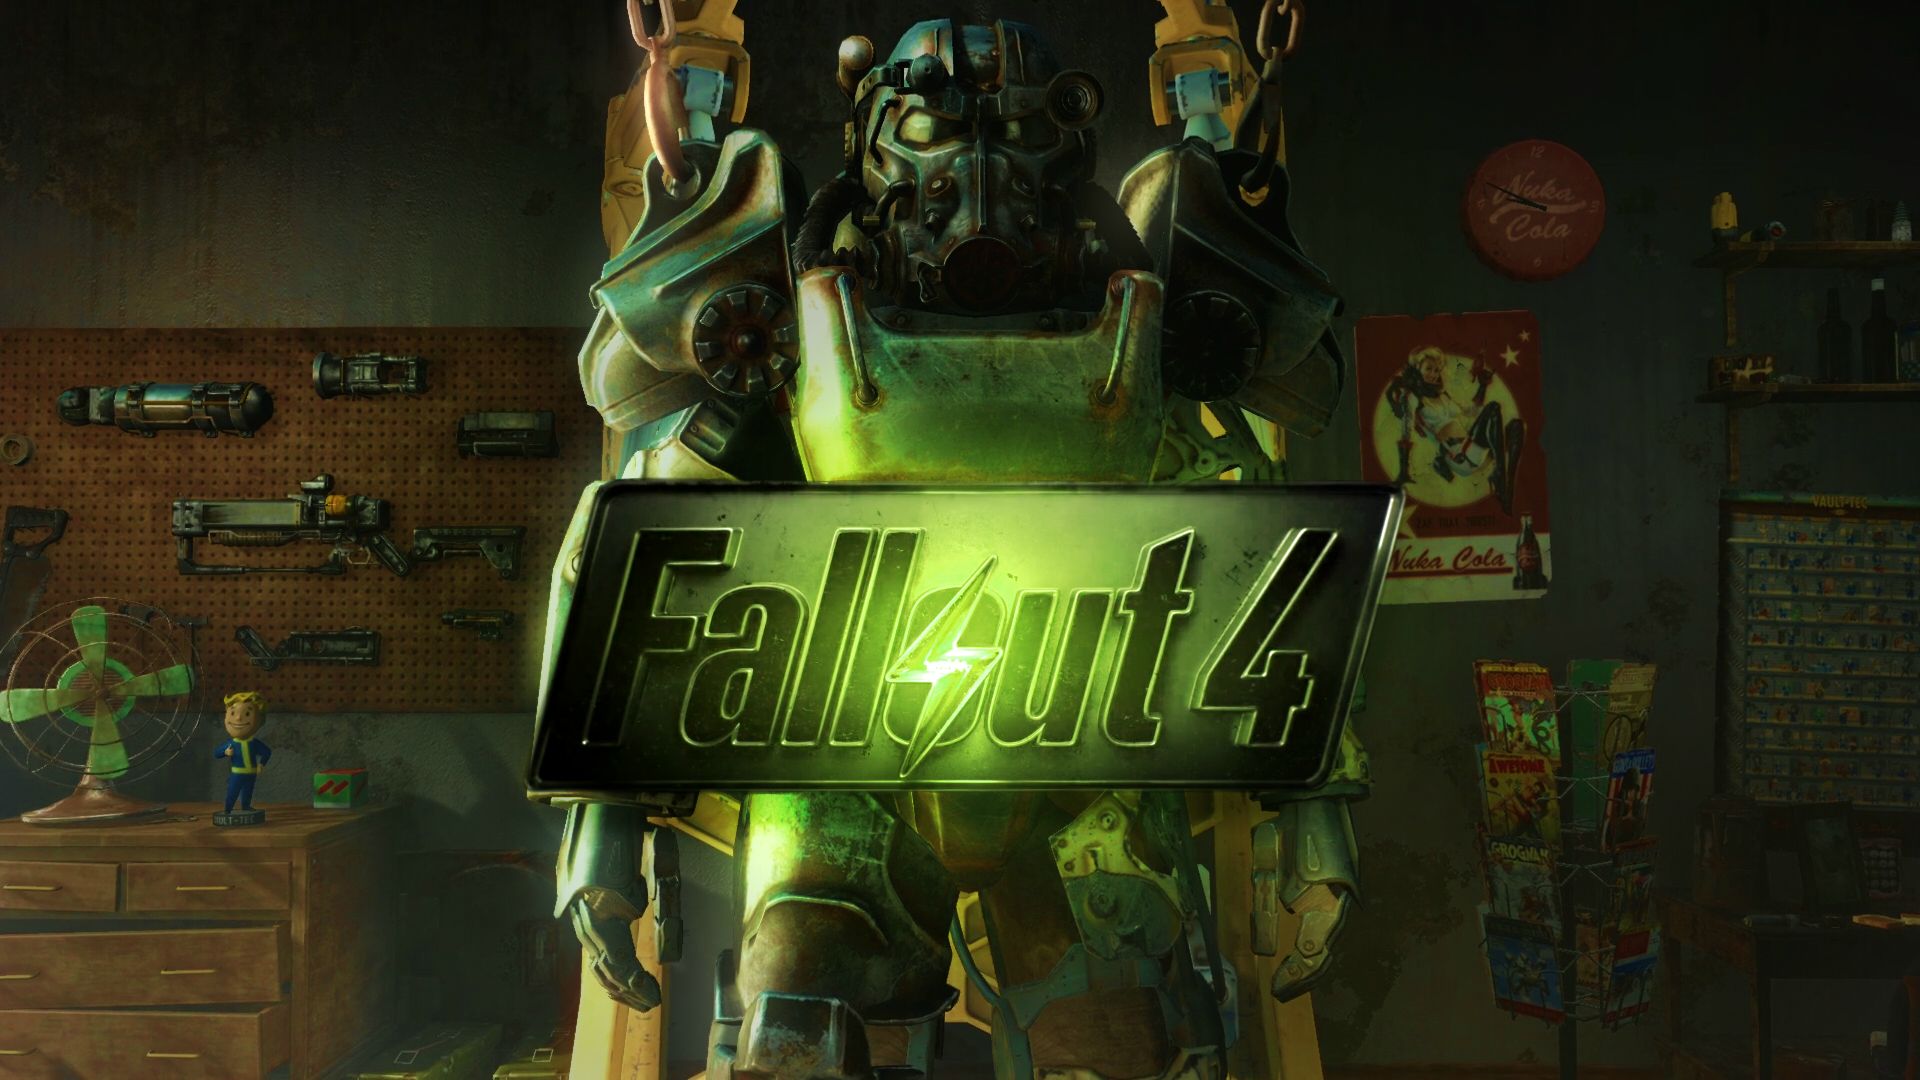 Fallout 4 Wallpaper Free On Wallpaper Hd 1920 X 1080 - Fallout 4 Wallpaper Full Hd - HD Wallpaper 